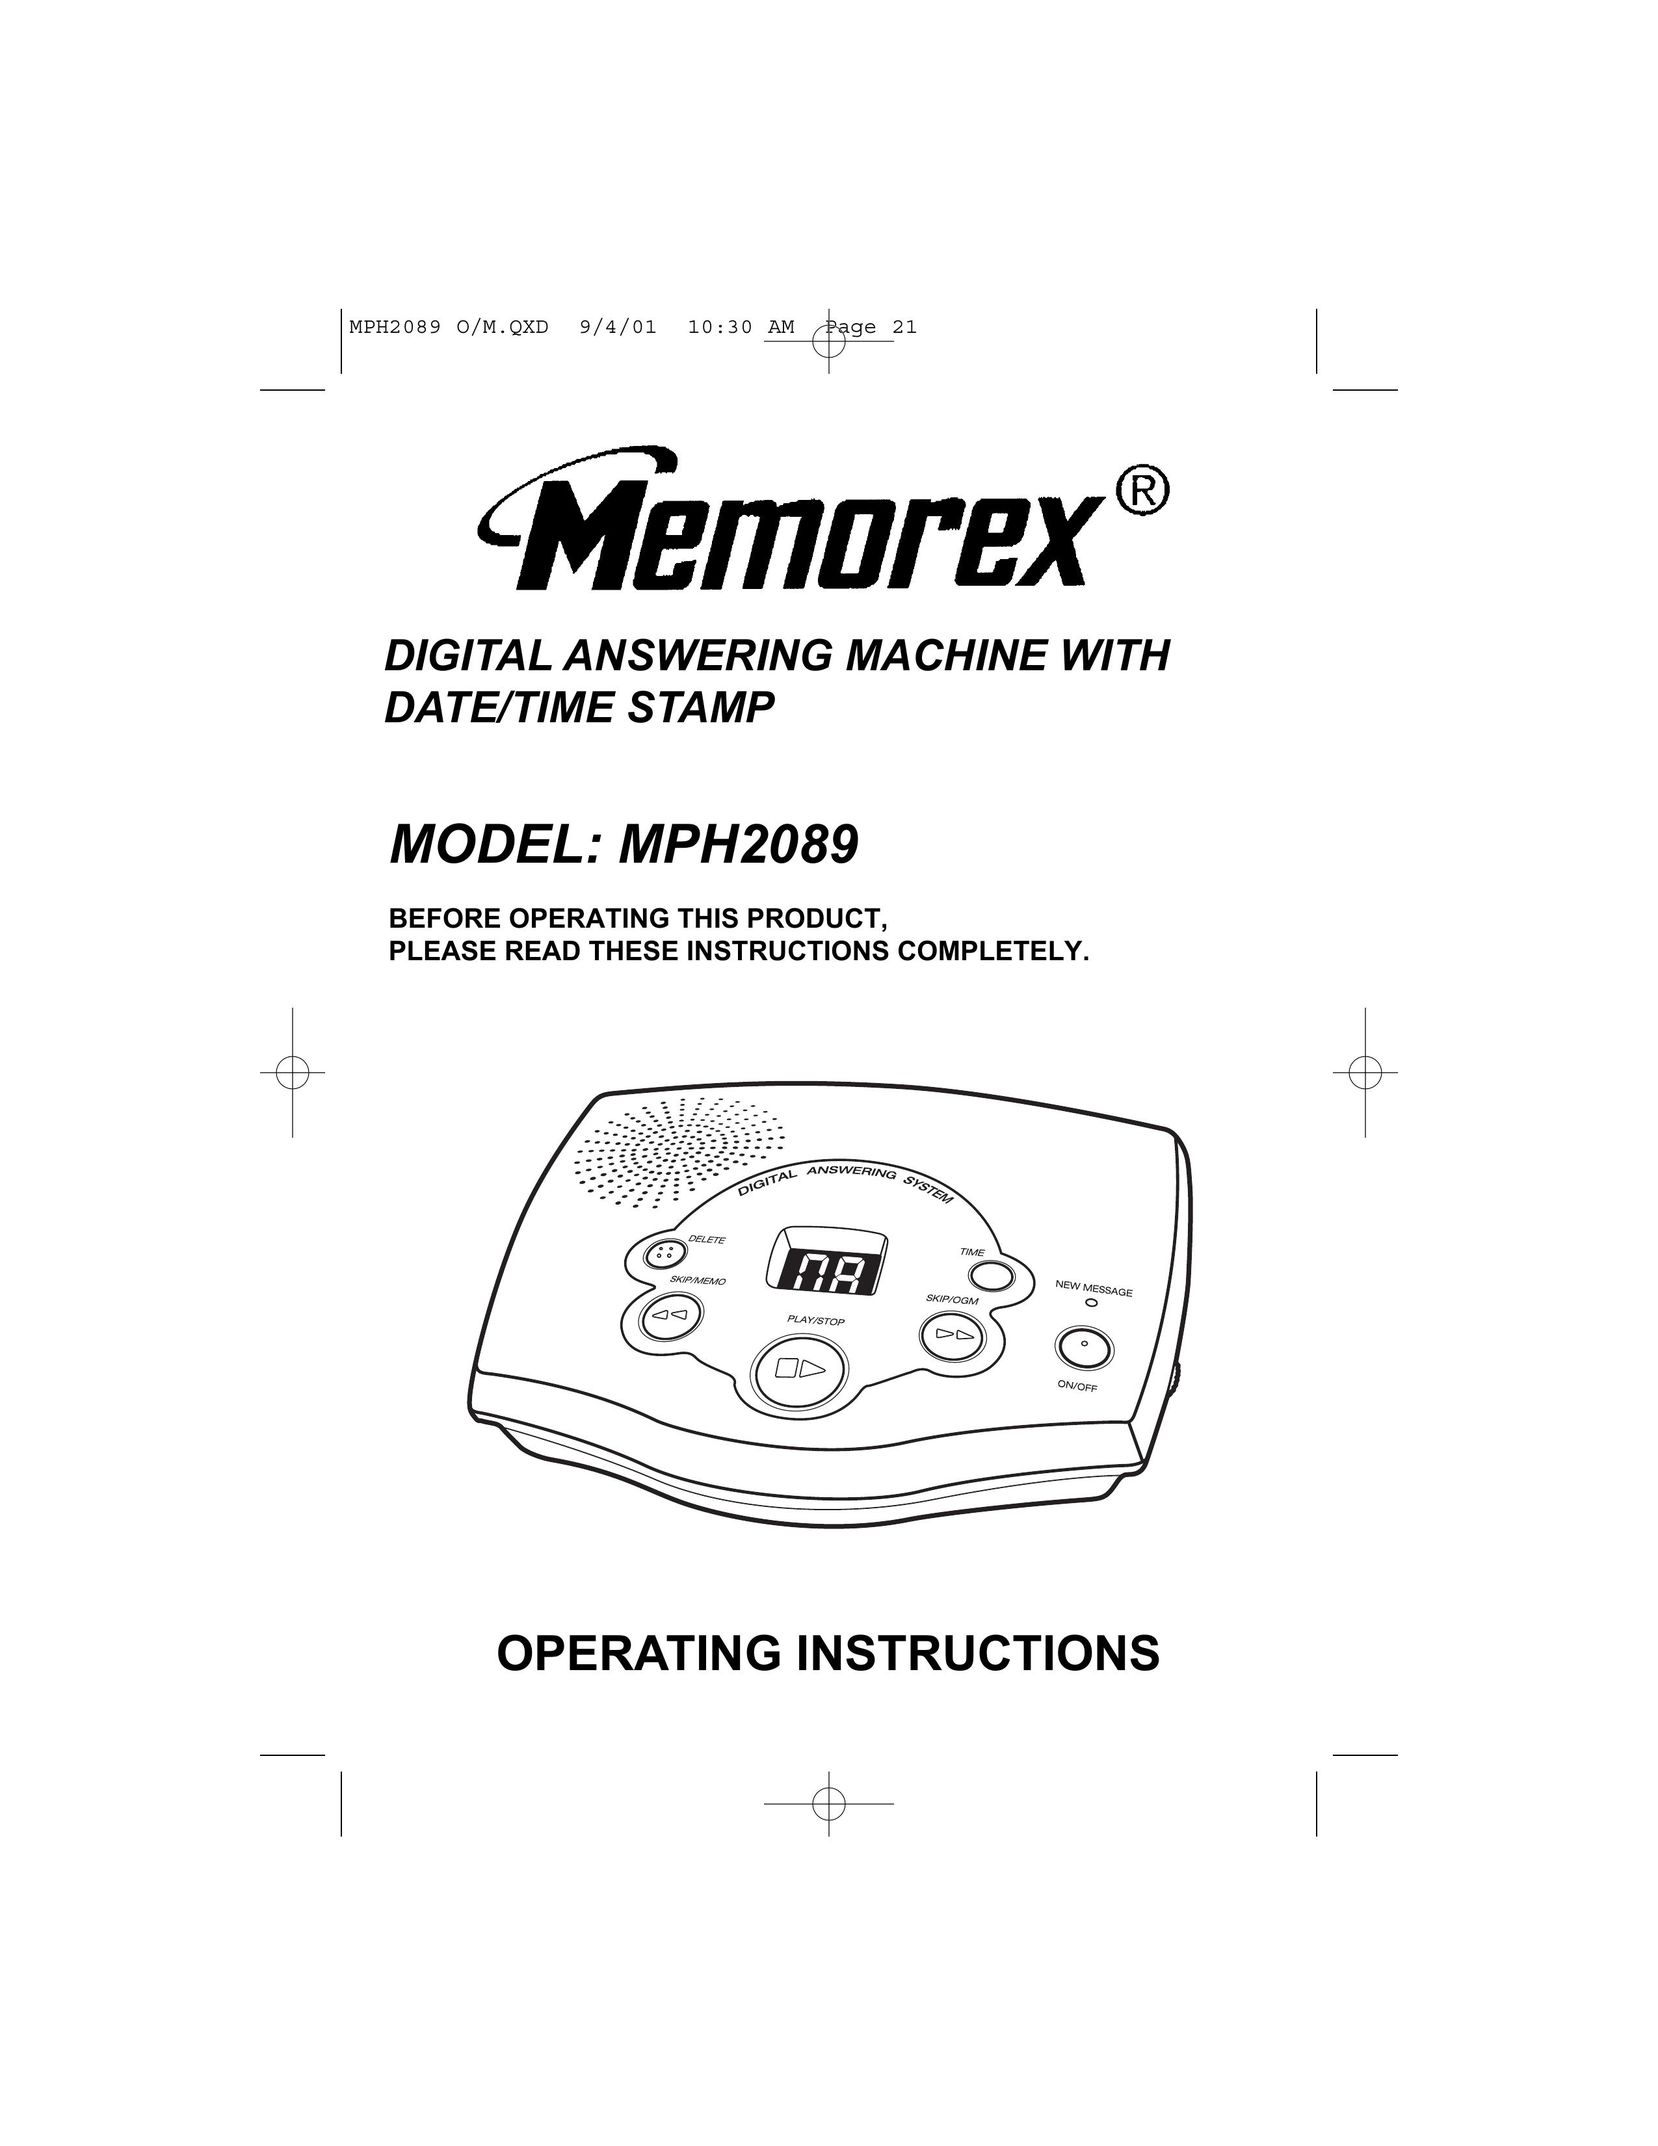 Memorex MPH2089 Answering Machine User Manual